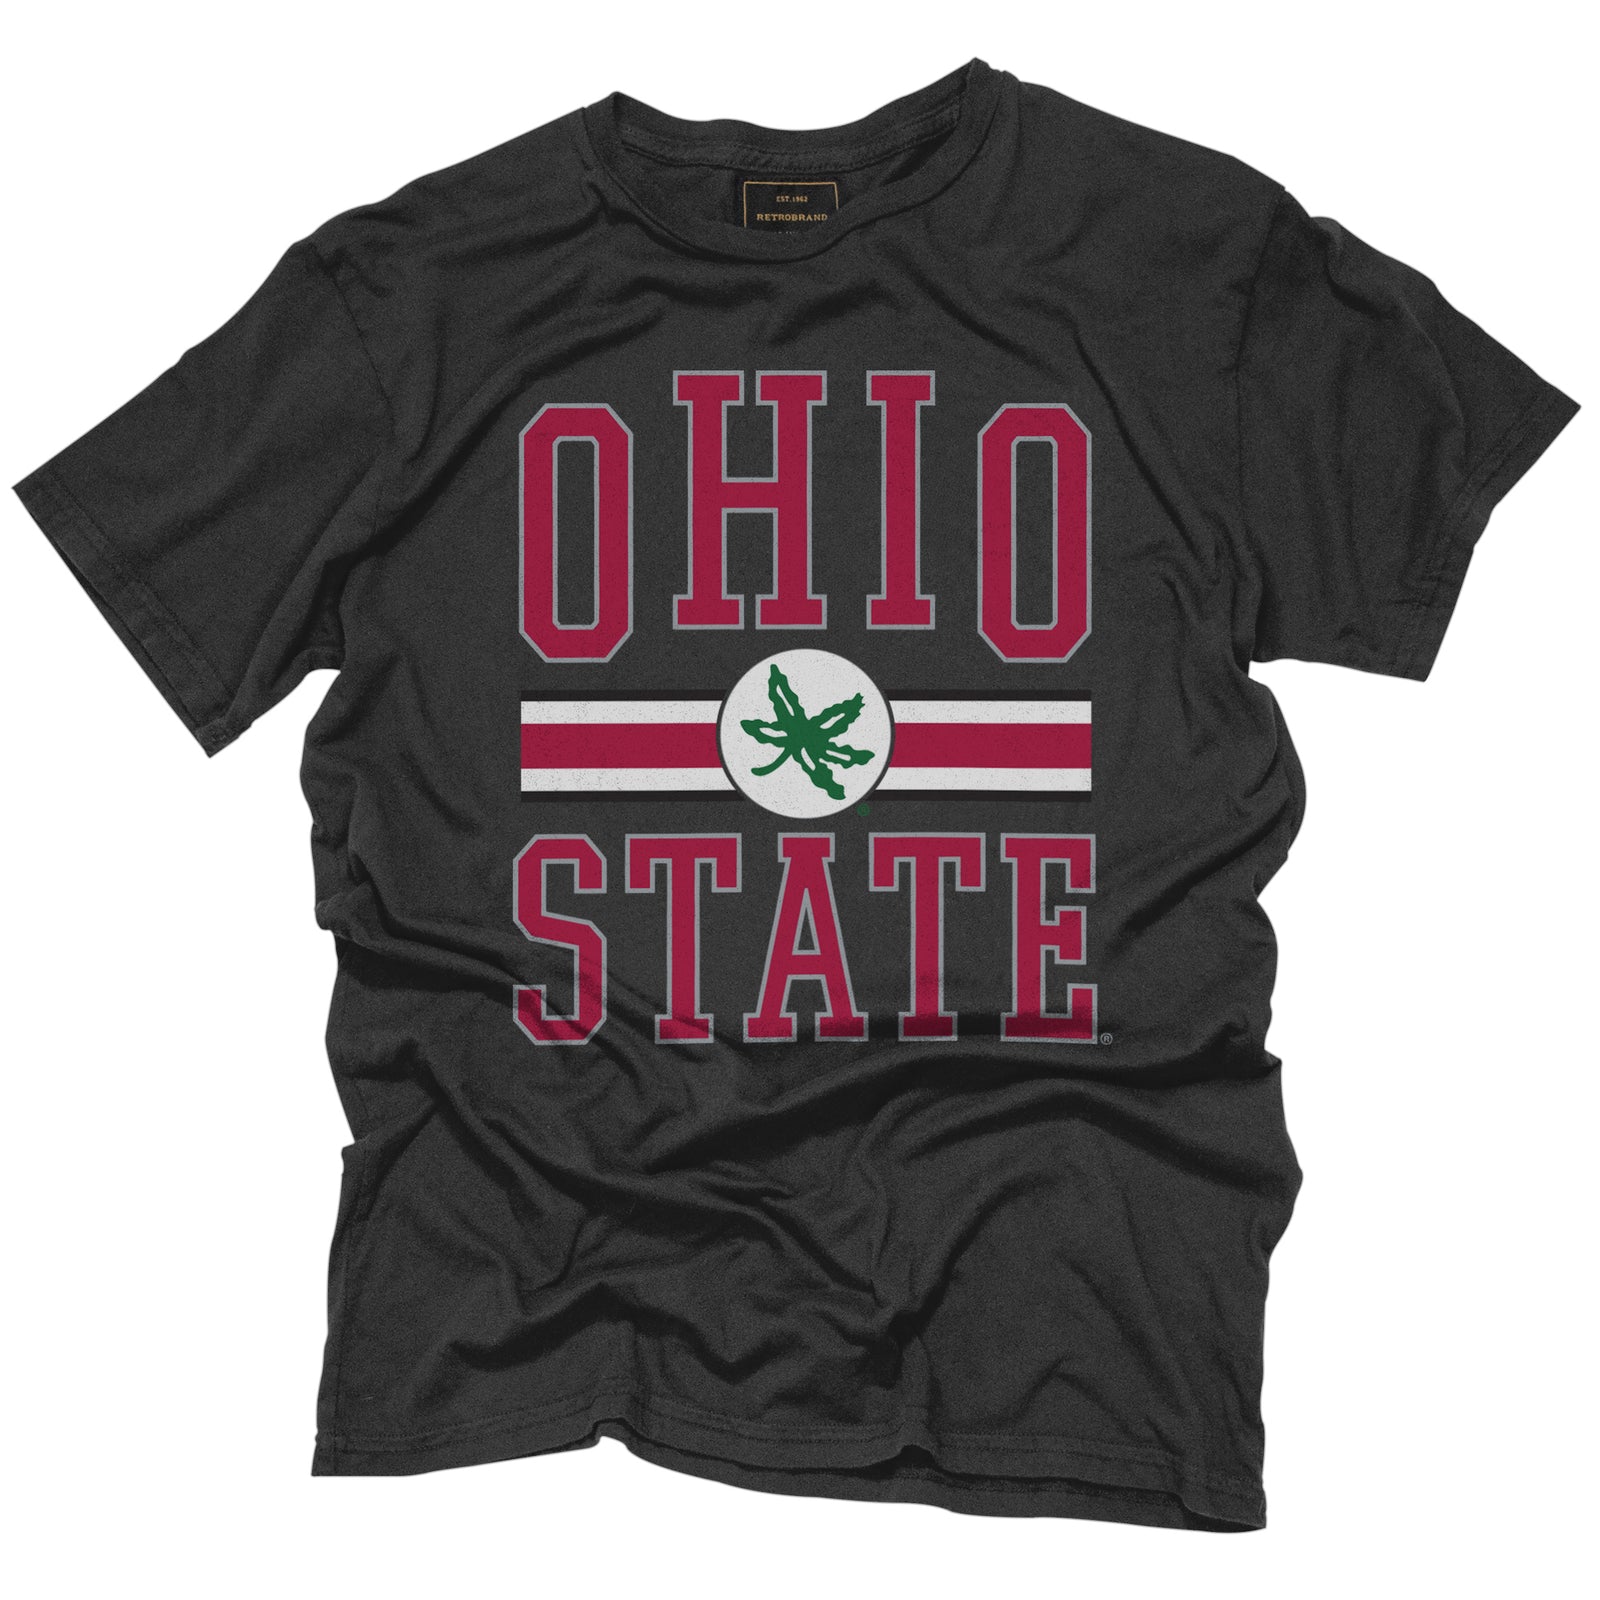 Ohio State Buckeyes Black Label Shirt